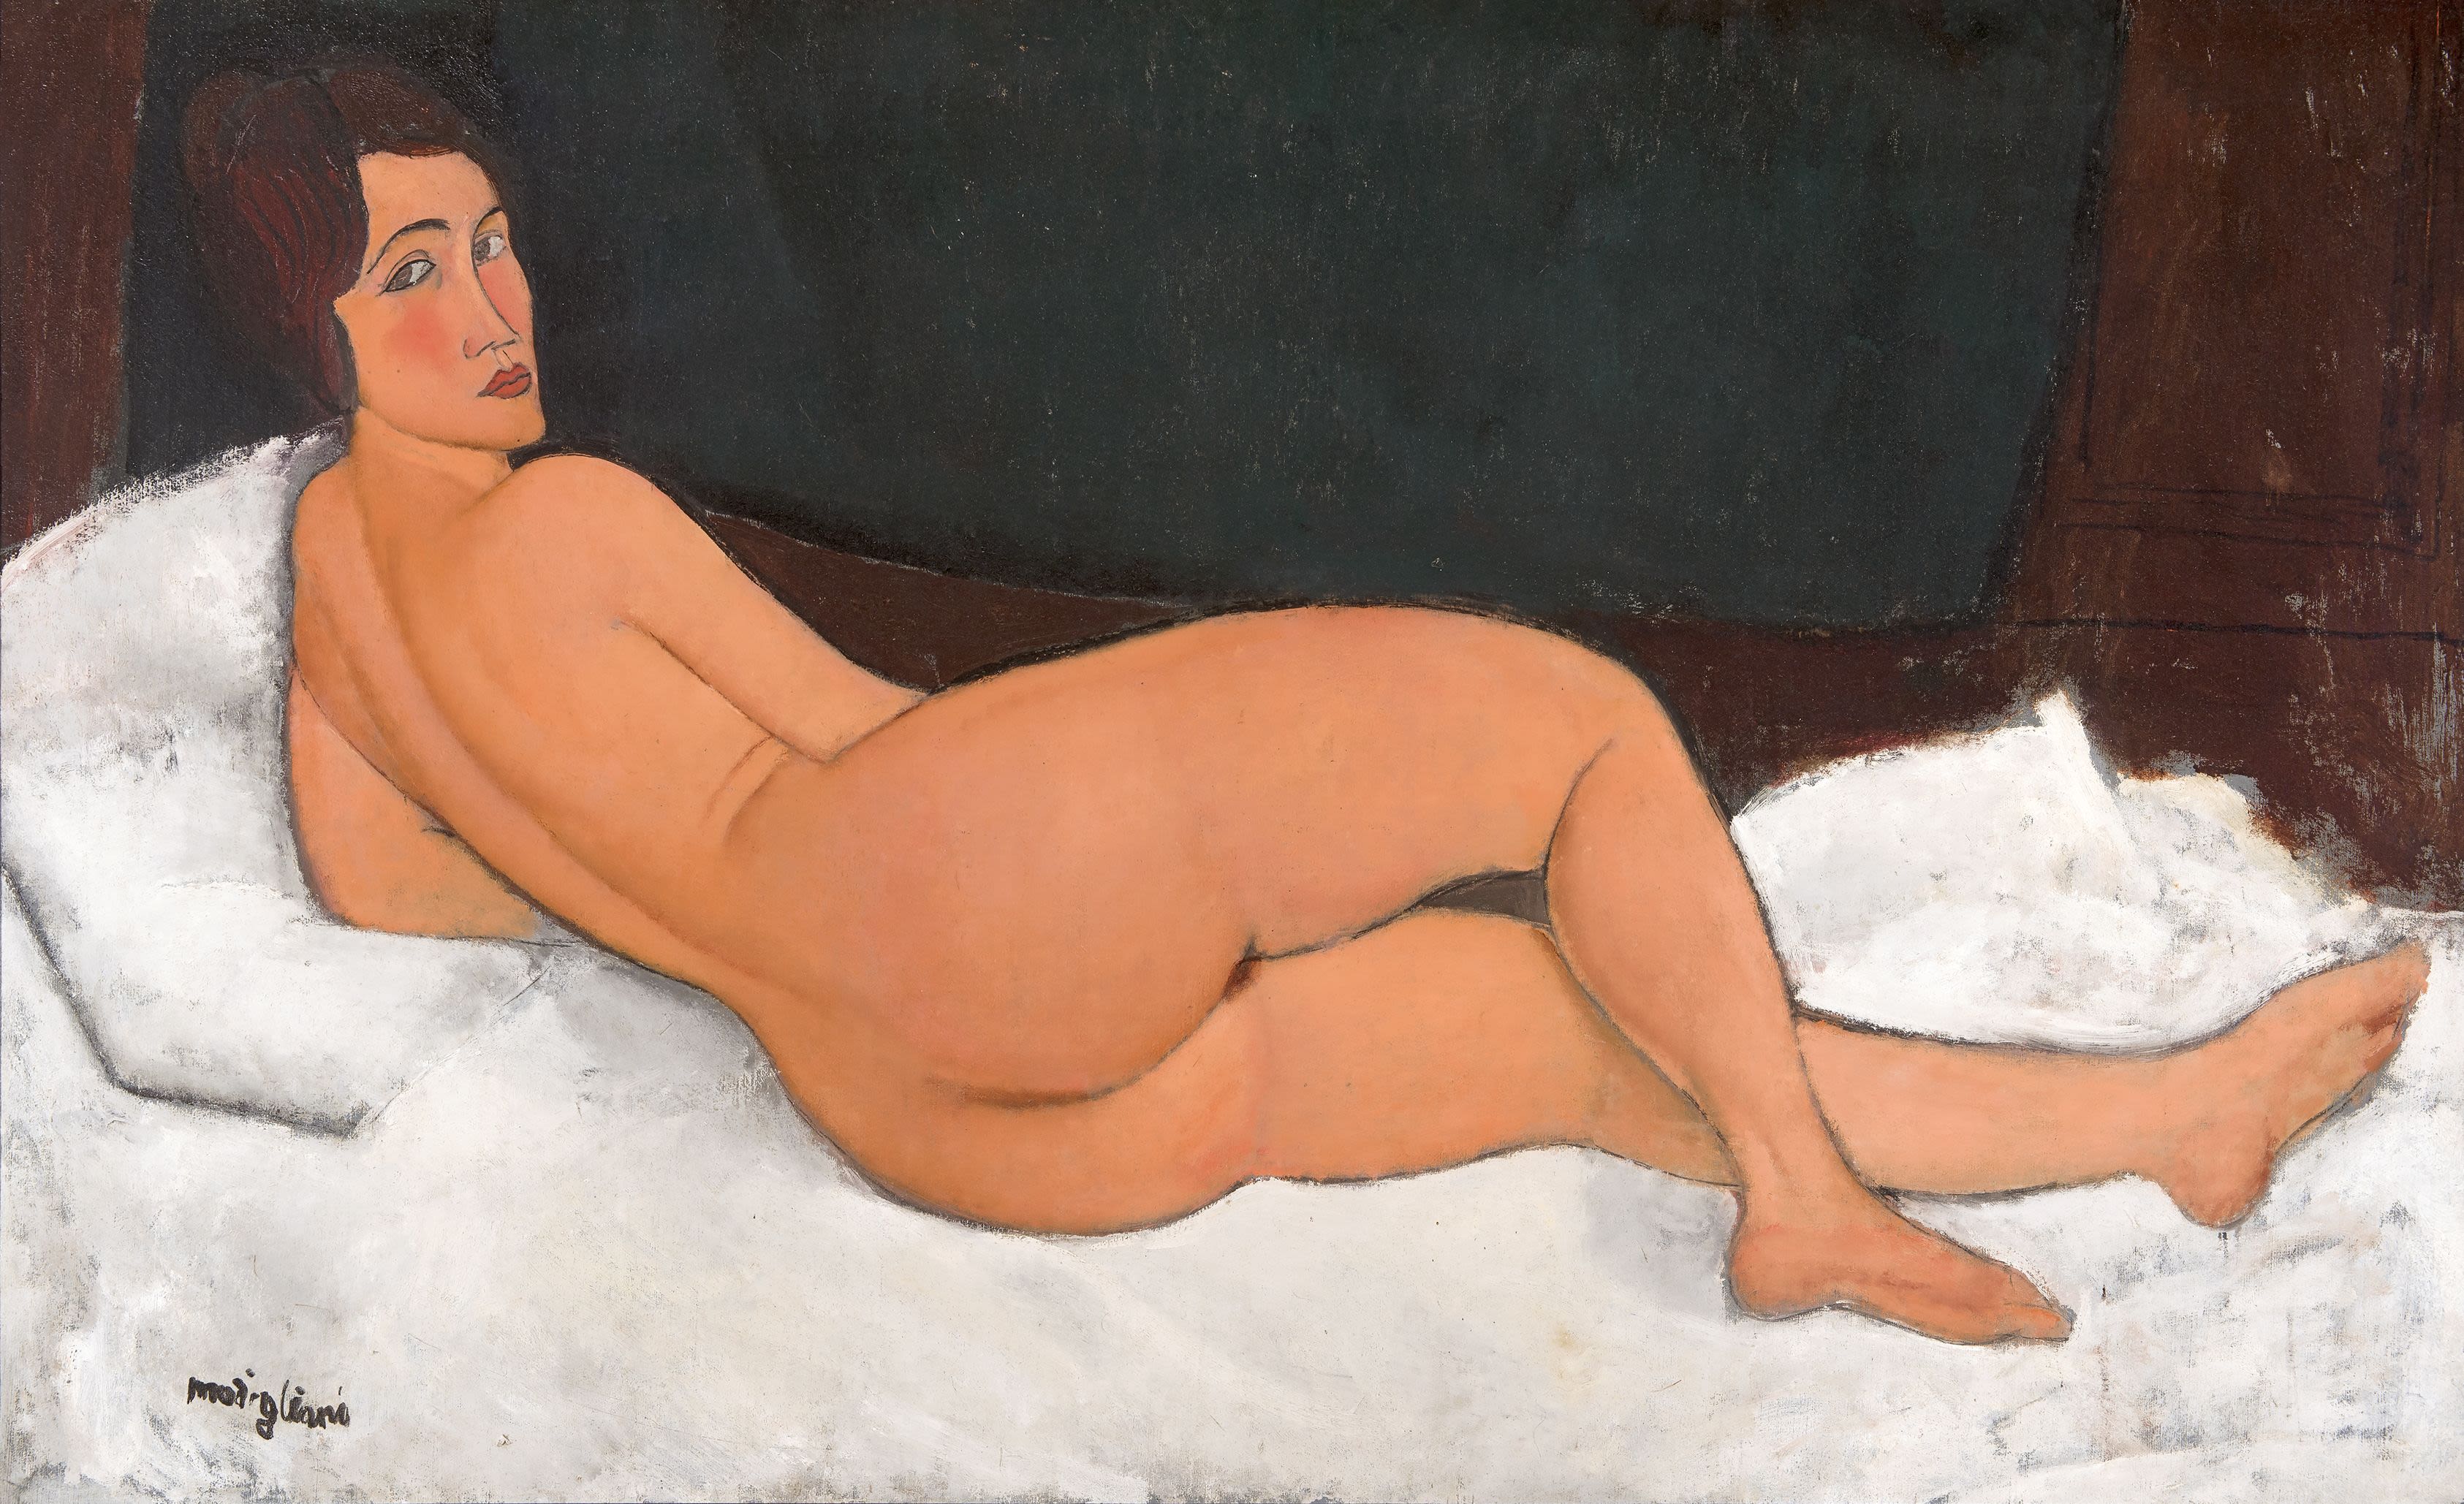 Nudism Porn - Nude art and censorship laid bare | CNN